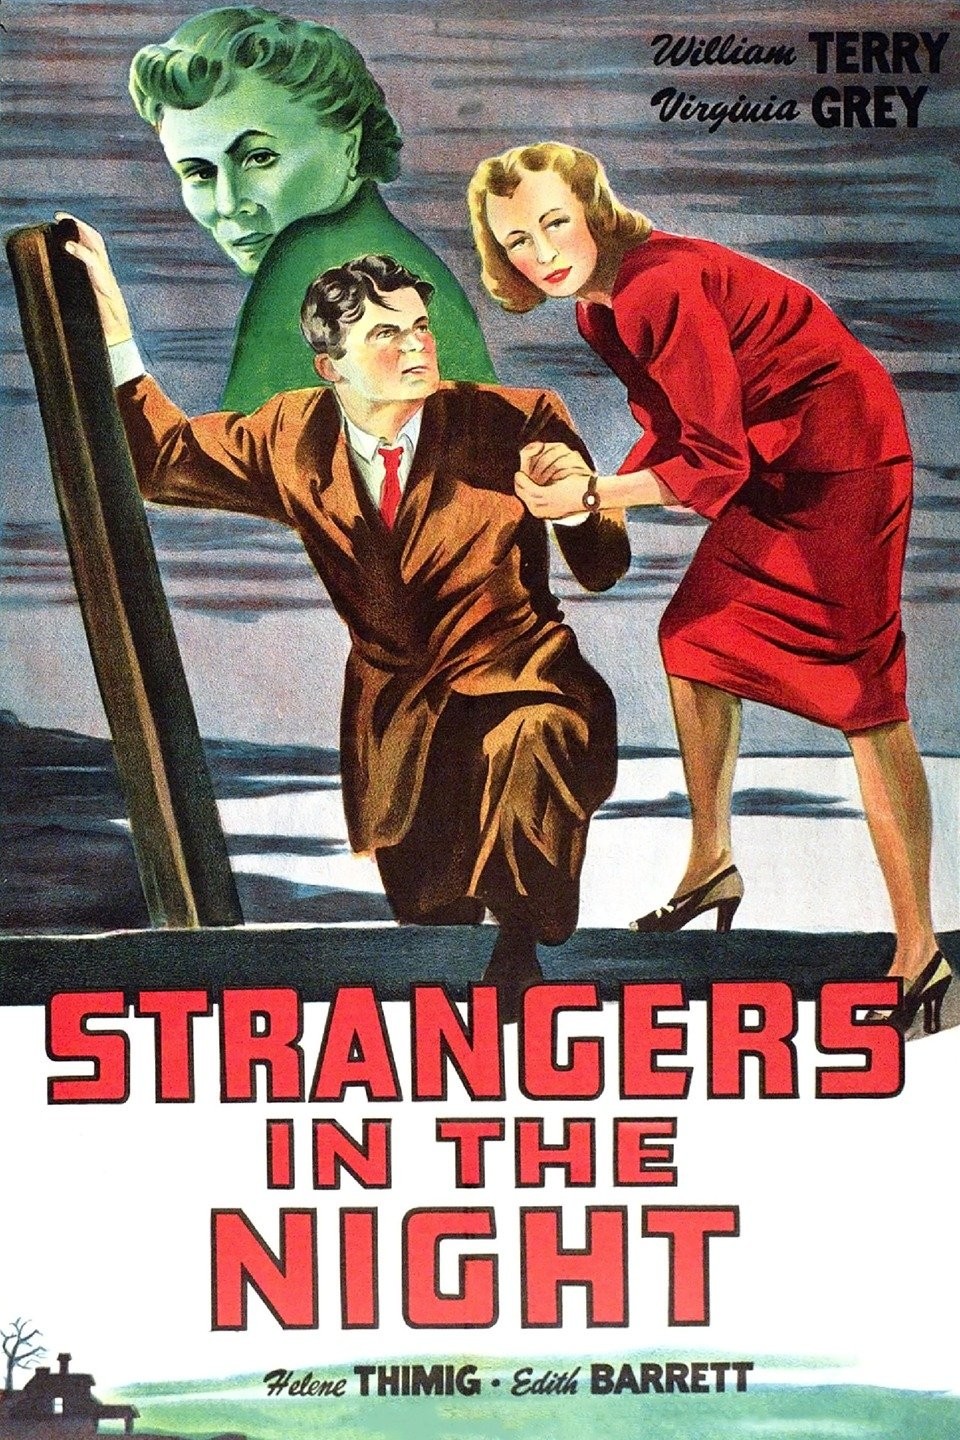 STRANGERS IN THE NIGHT, US lobbycard, from left: Edith Barrett